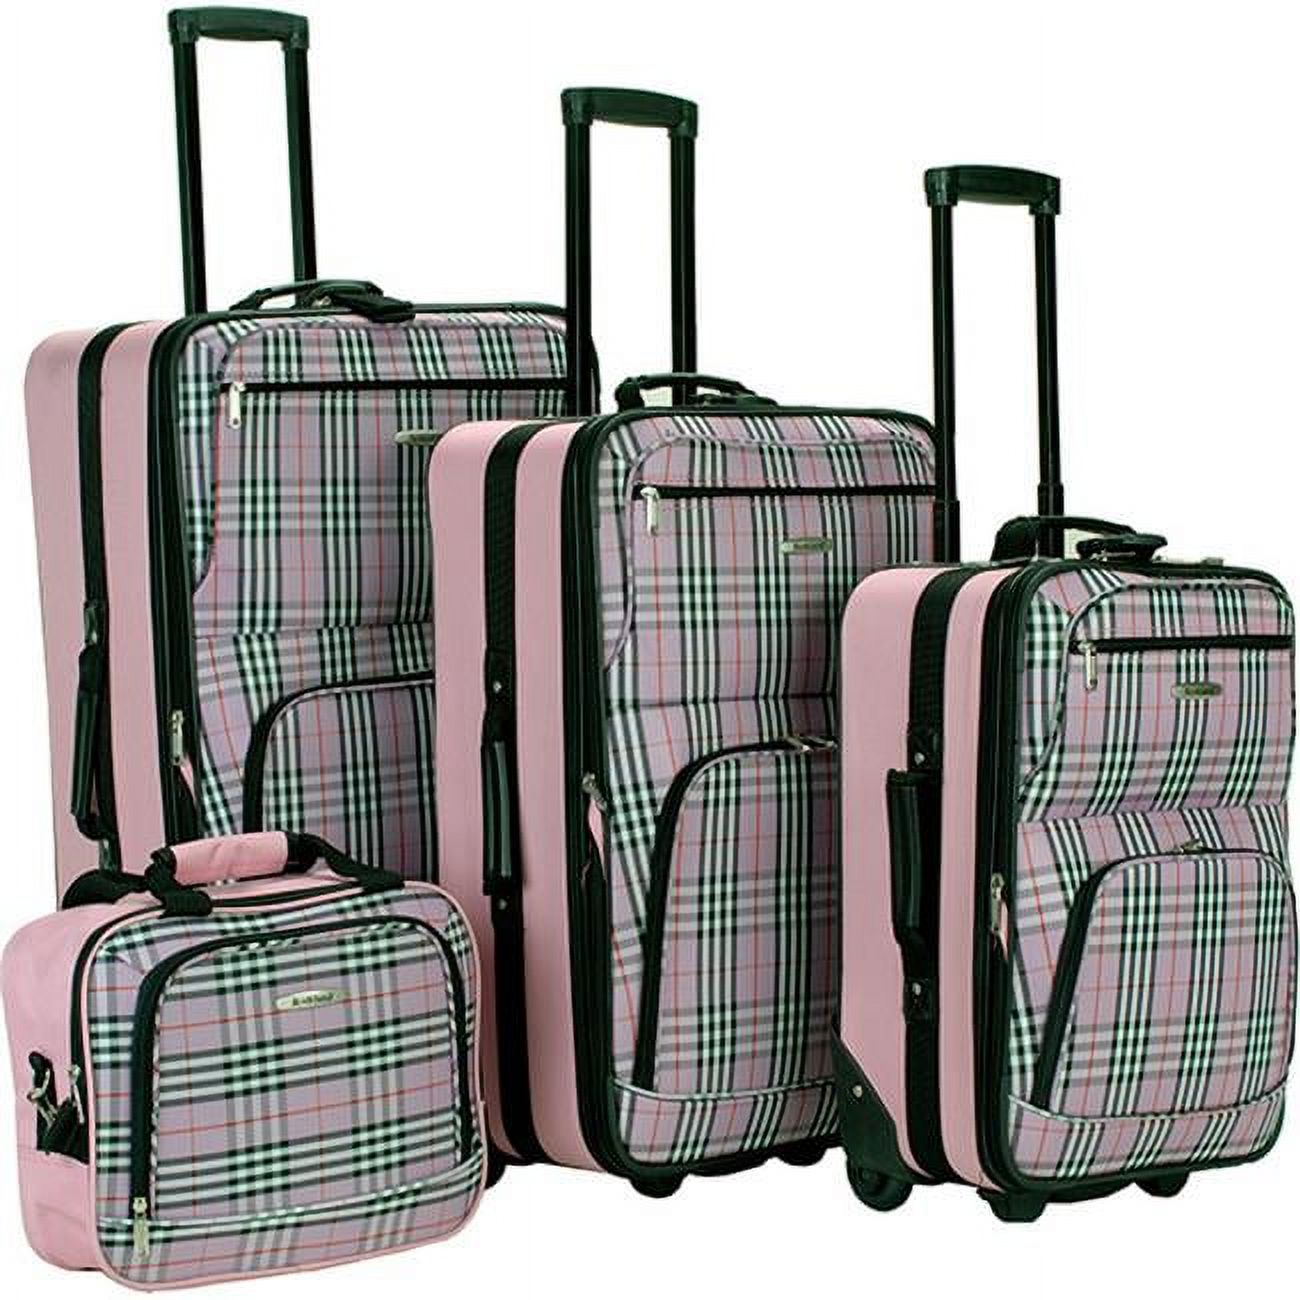 Rockland Luggage Fashion Collection 4 Piece Softside Expandable Luggage Set - image 1 of 5